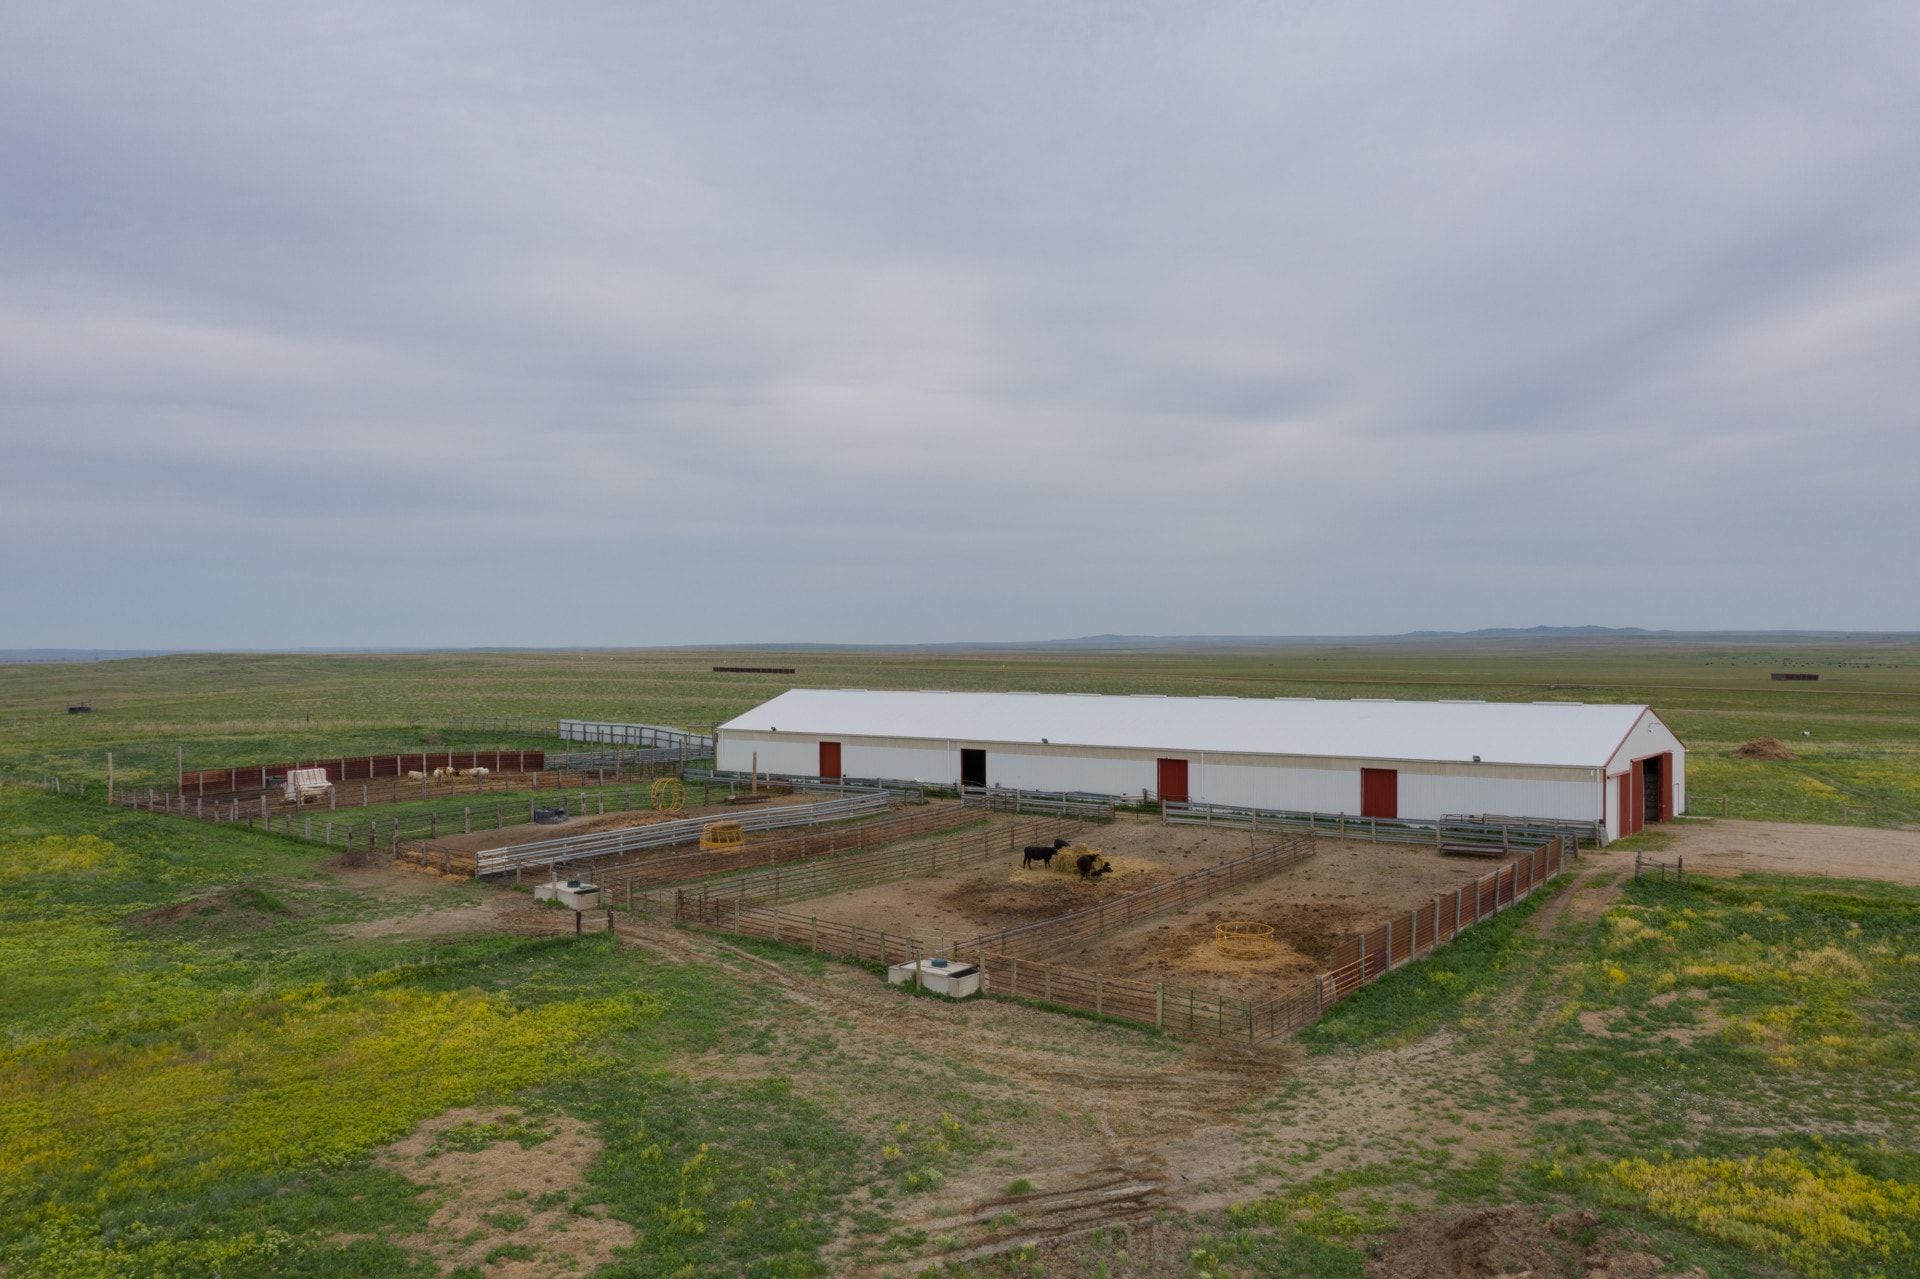 livestock barn south dakota northern plains grassland cattle ranch